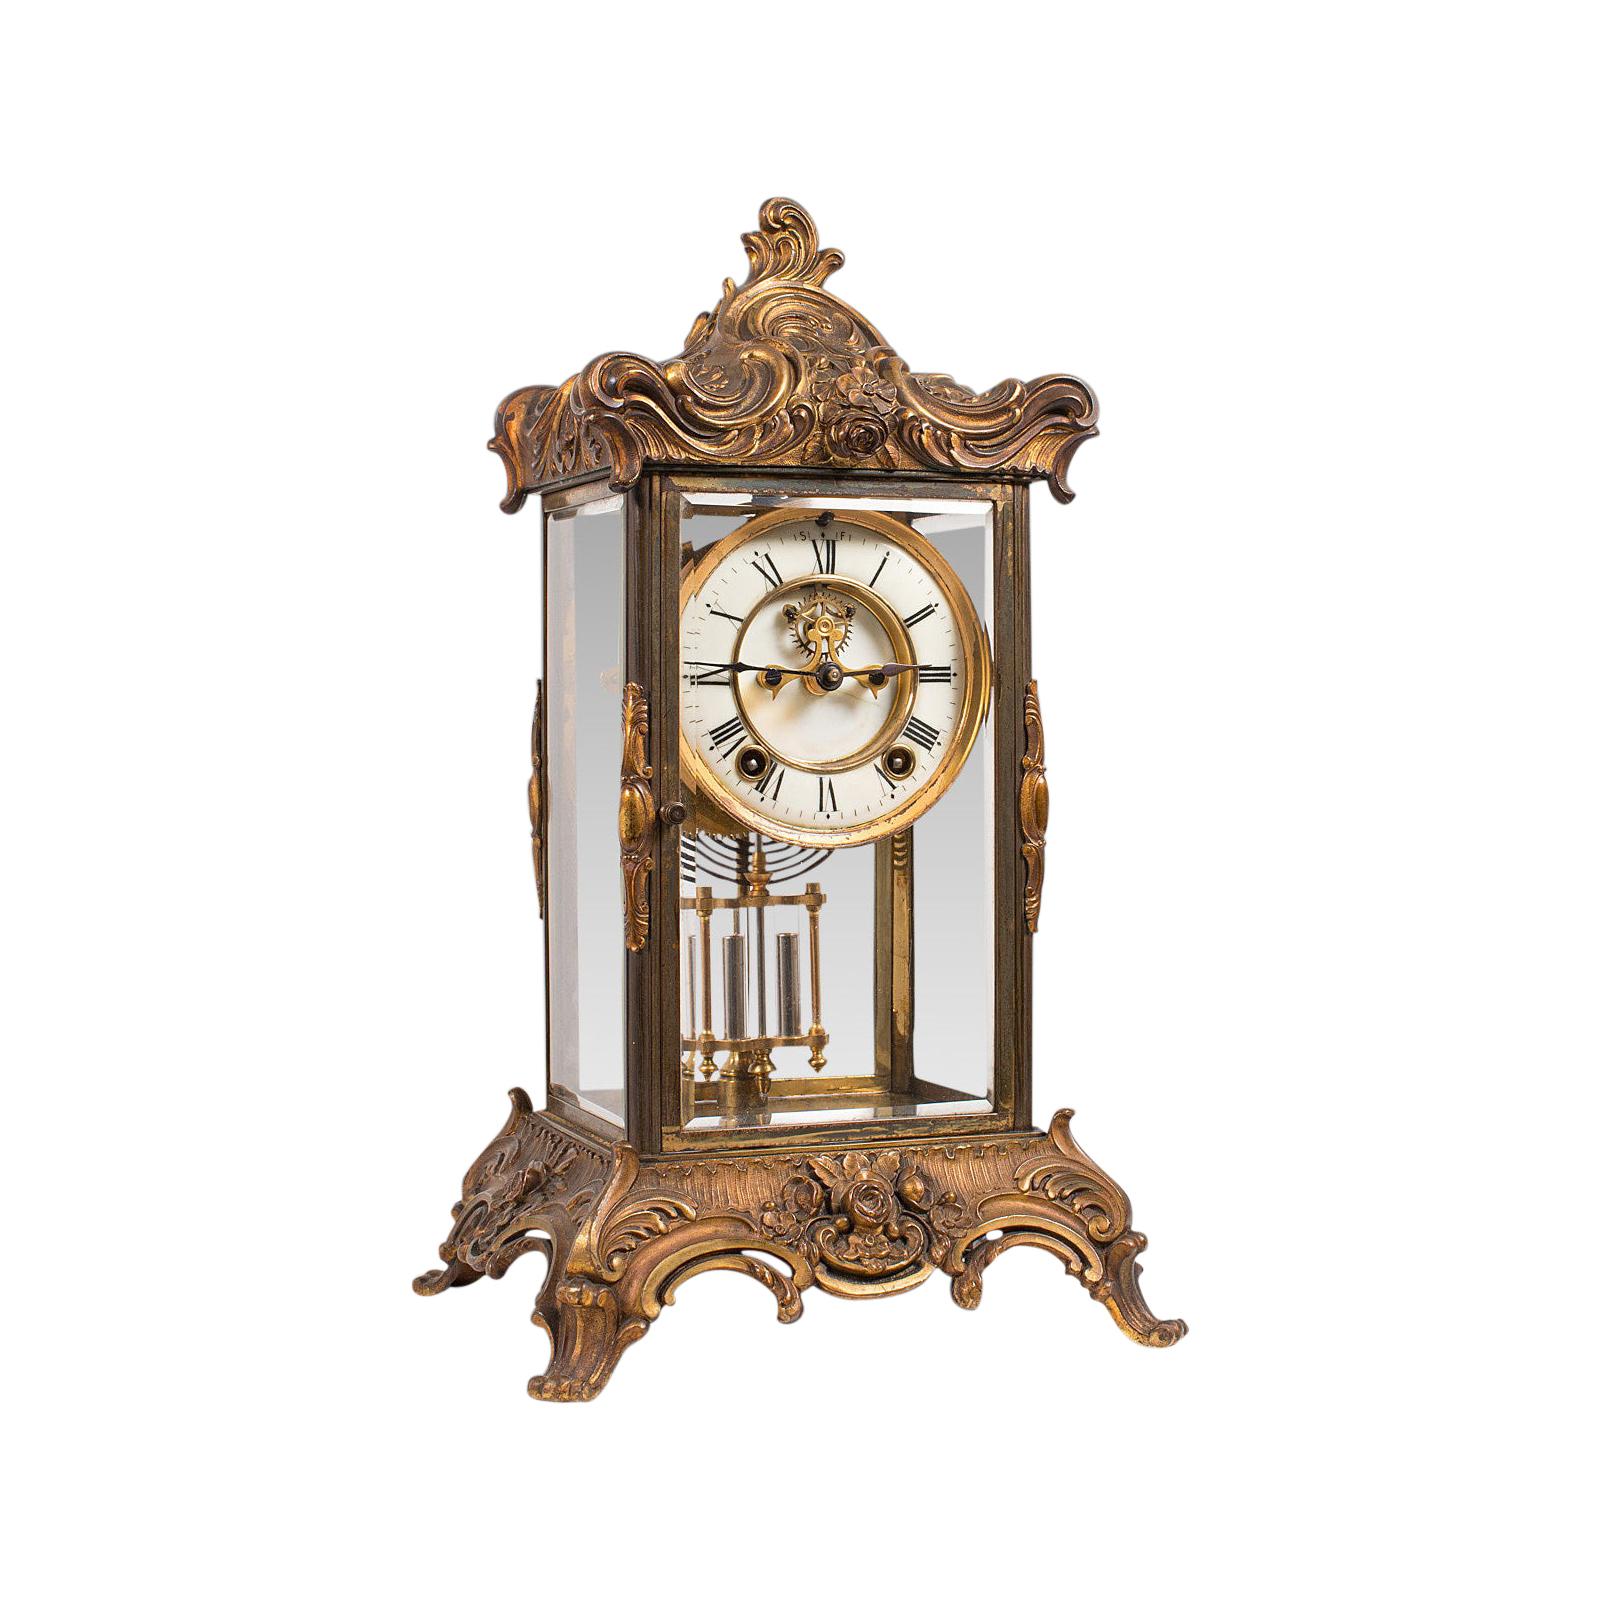 Antique Mantel Clock, French, Gilt Bronze, Ormolu, Brocot Escapement, circa 1900